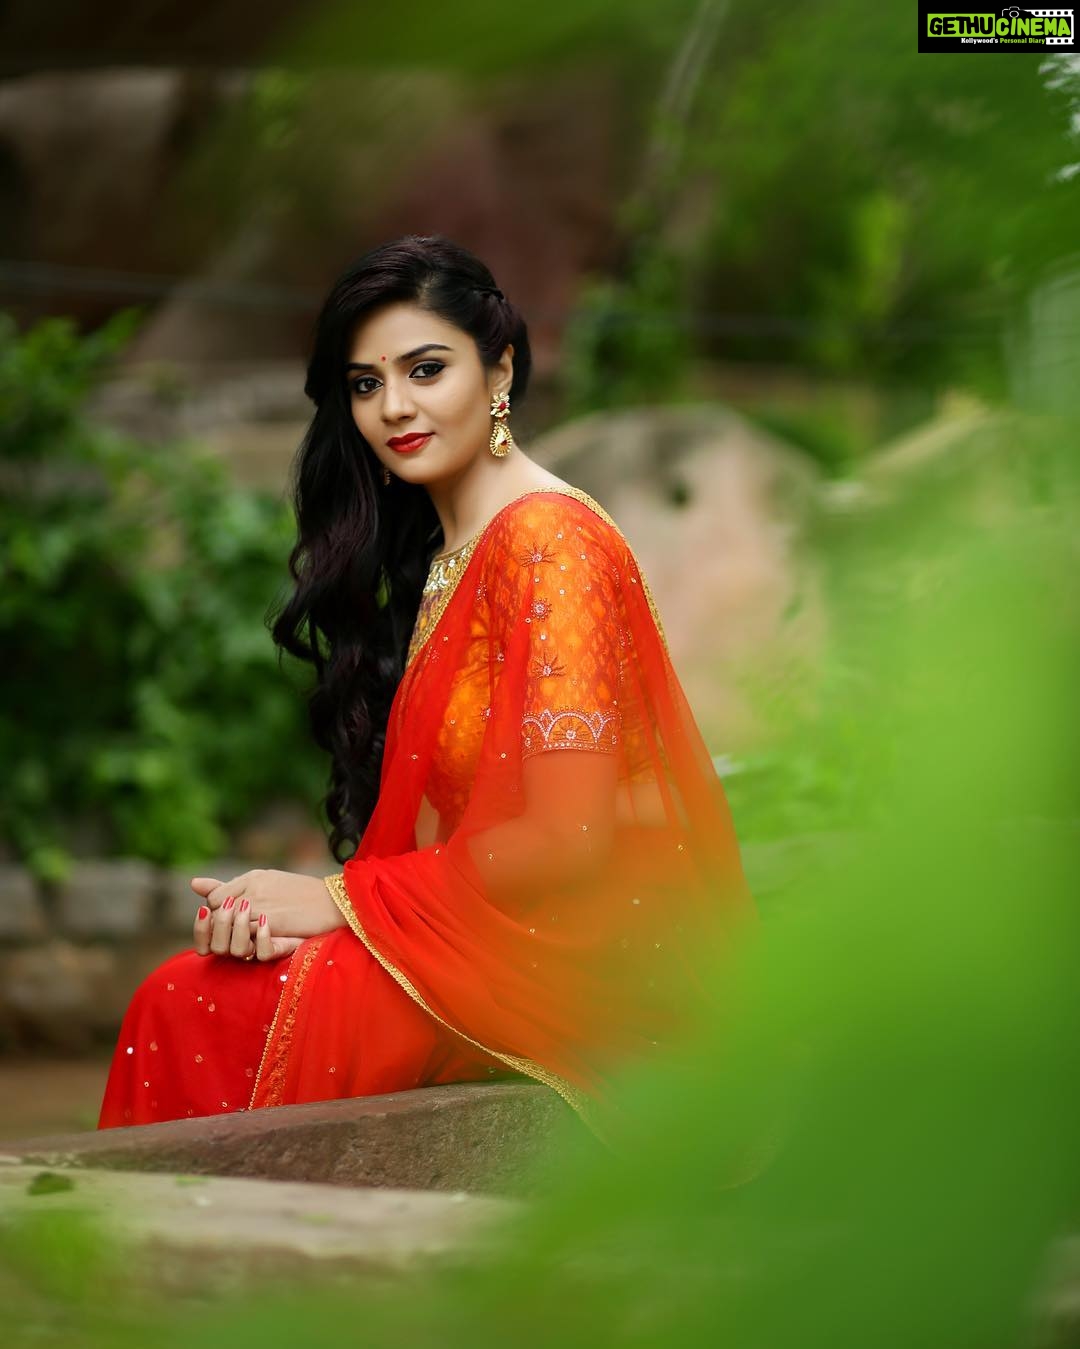 Actress Sreemukhi Instagram Photos and Posts August 2016 - Gethu Cinema